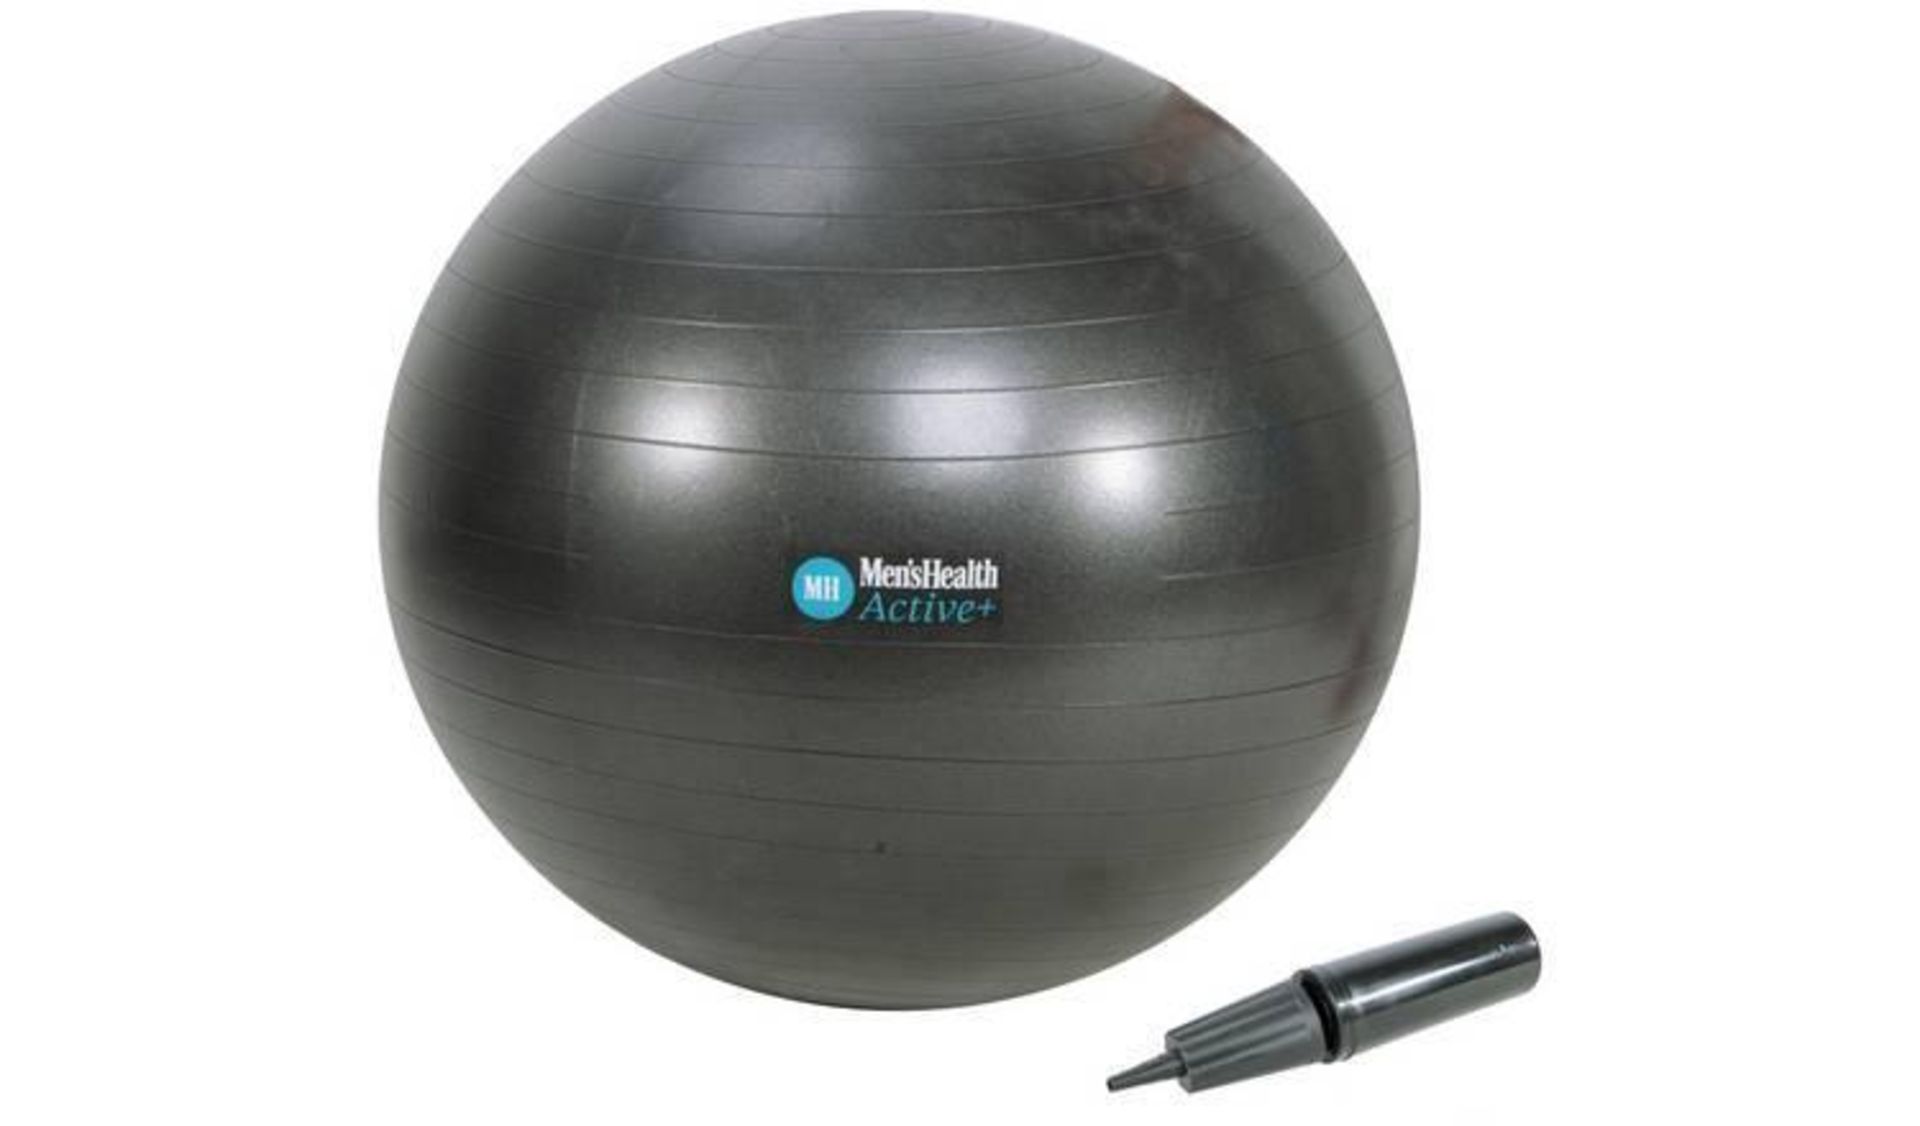 Men's Health Black Gym Ball - 75cm (239/3045) - £11.99 RRP